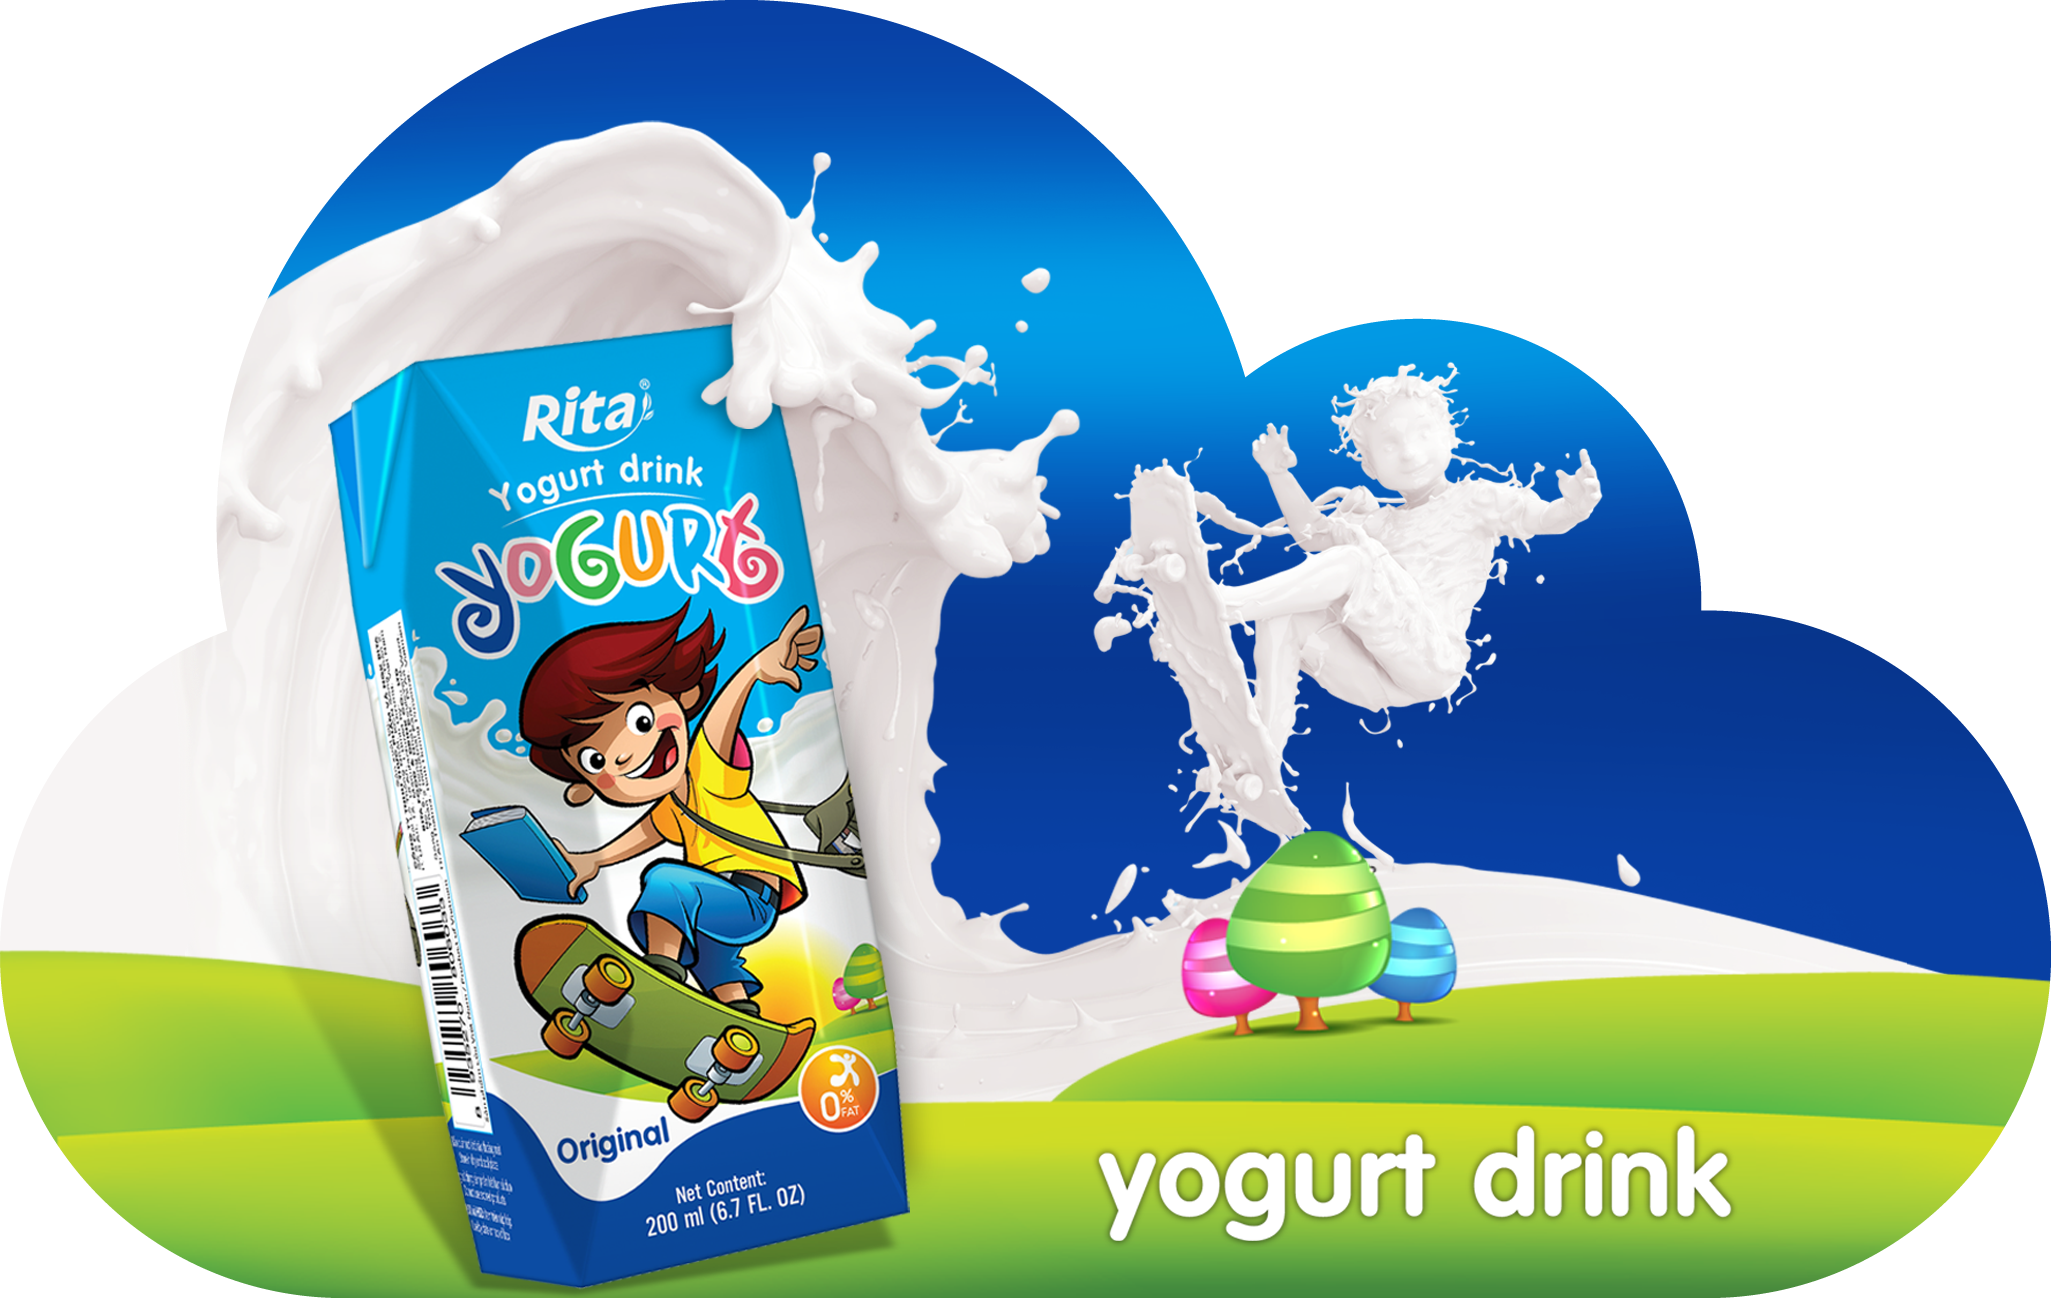 Rita yogurt drink 